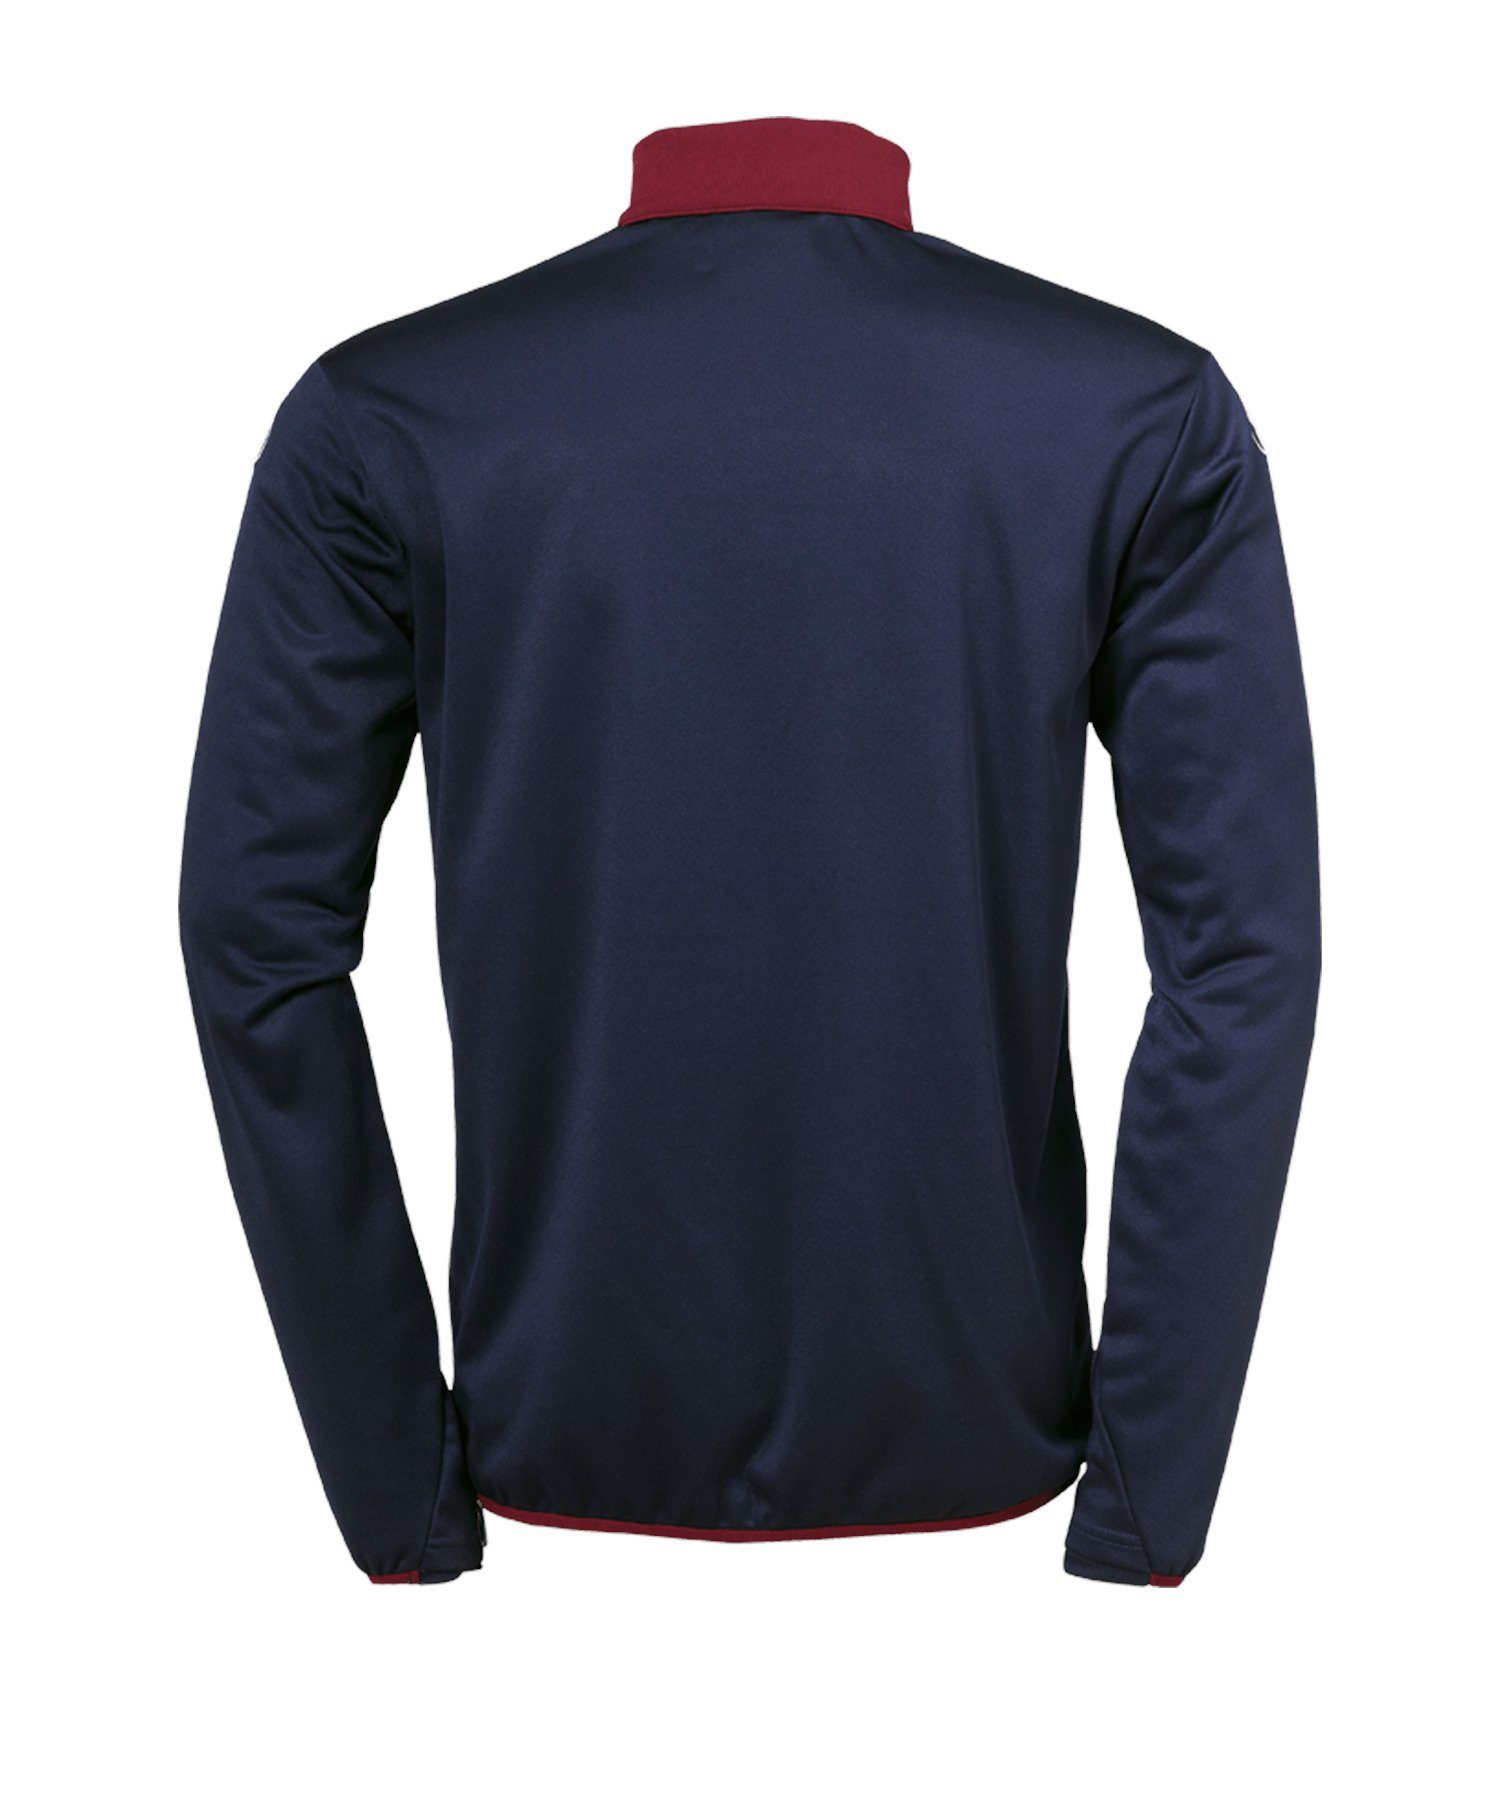 uhlsport 23 Ziptop blaurotgelb Offense Sweatshirt